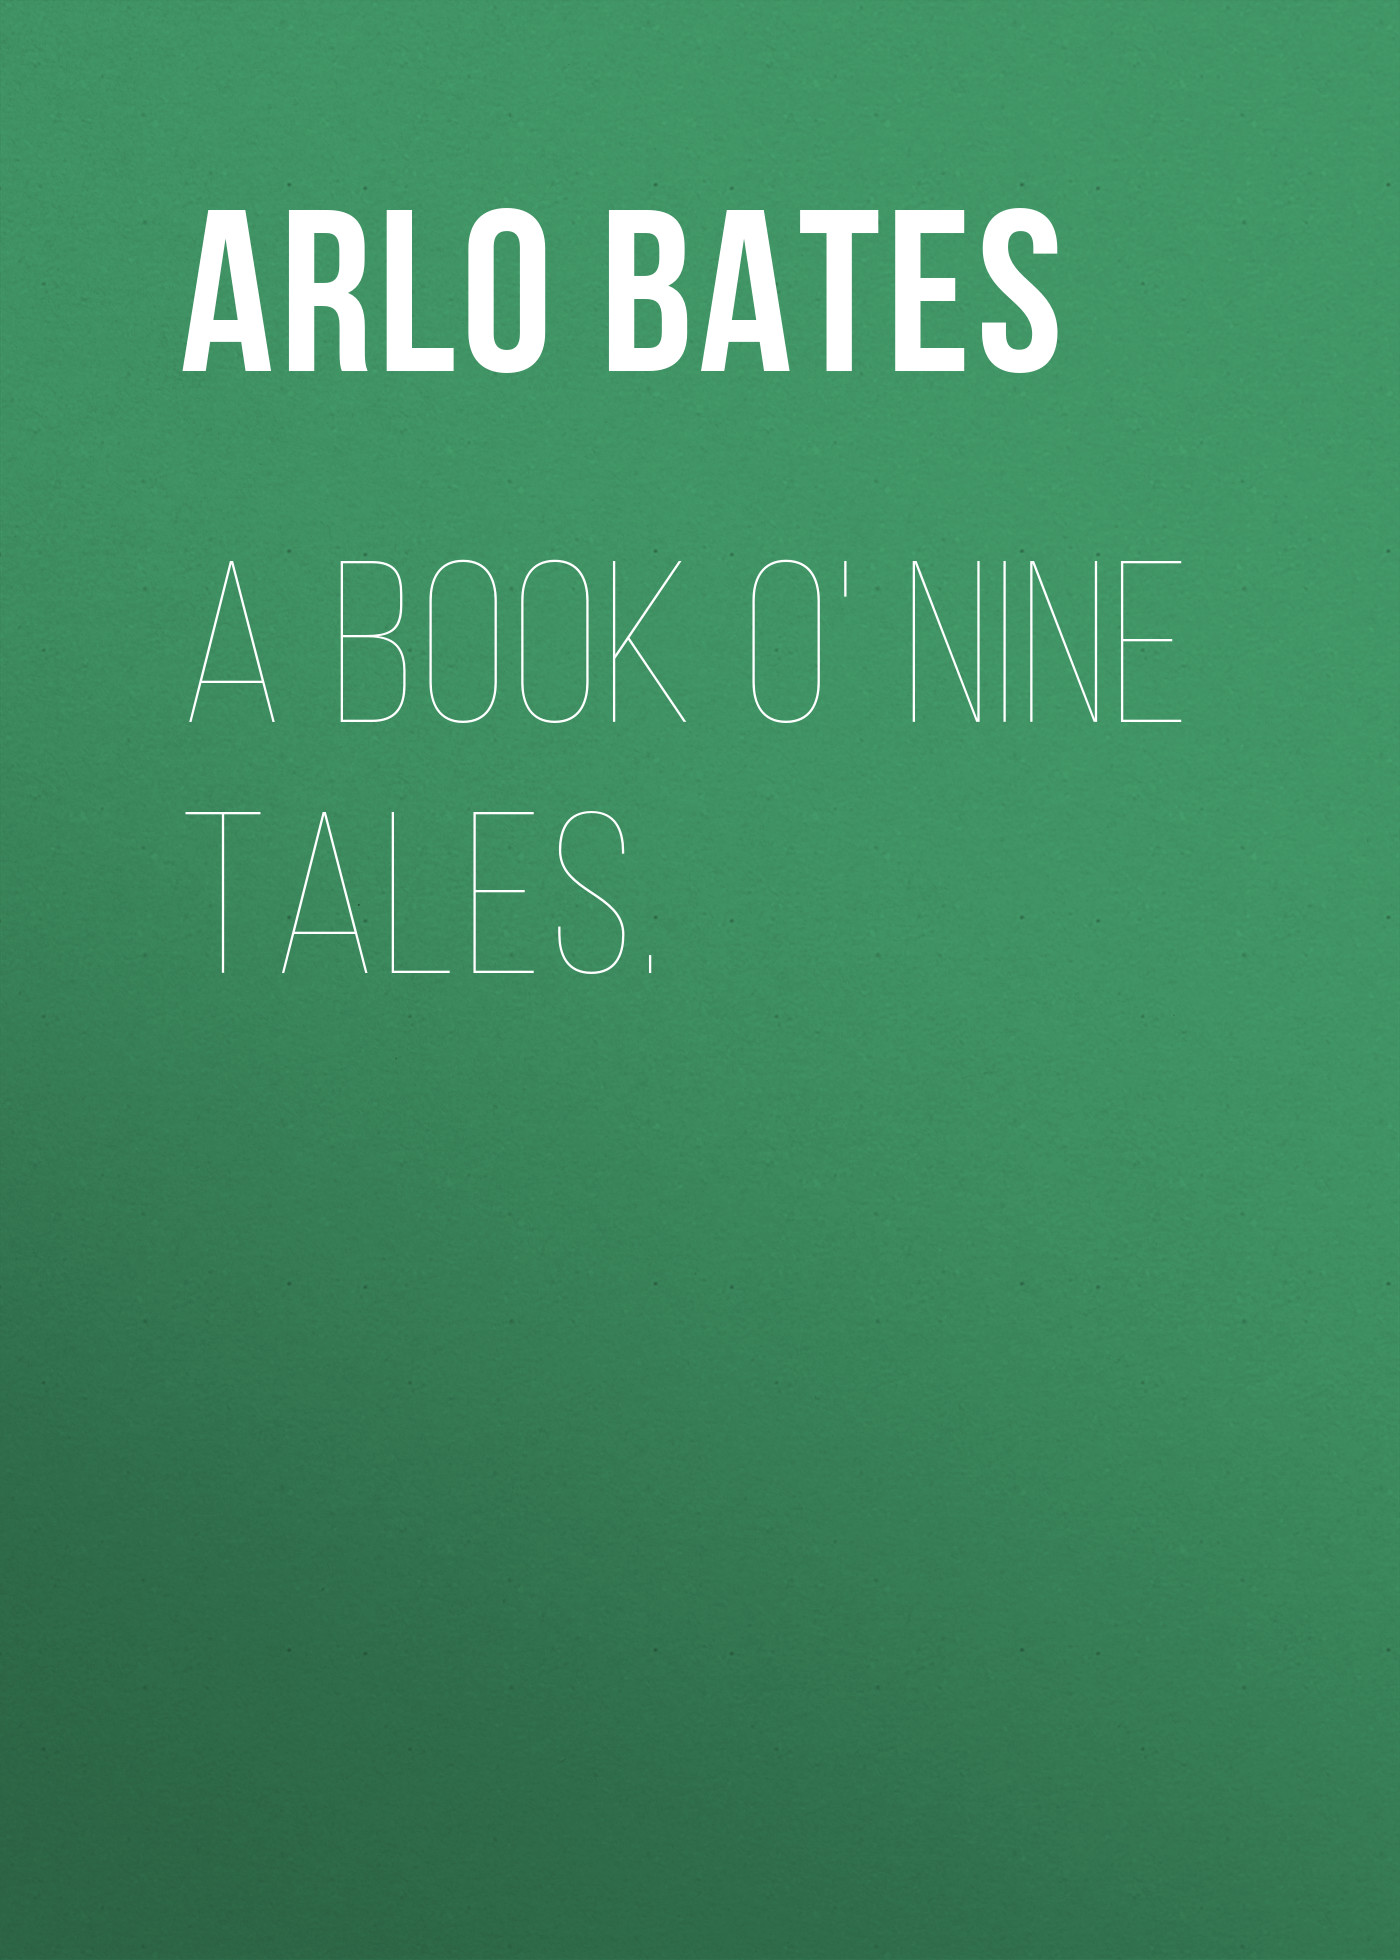 A Book o'Nine Tales.